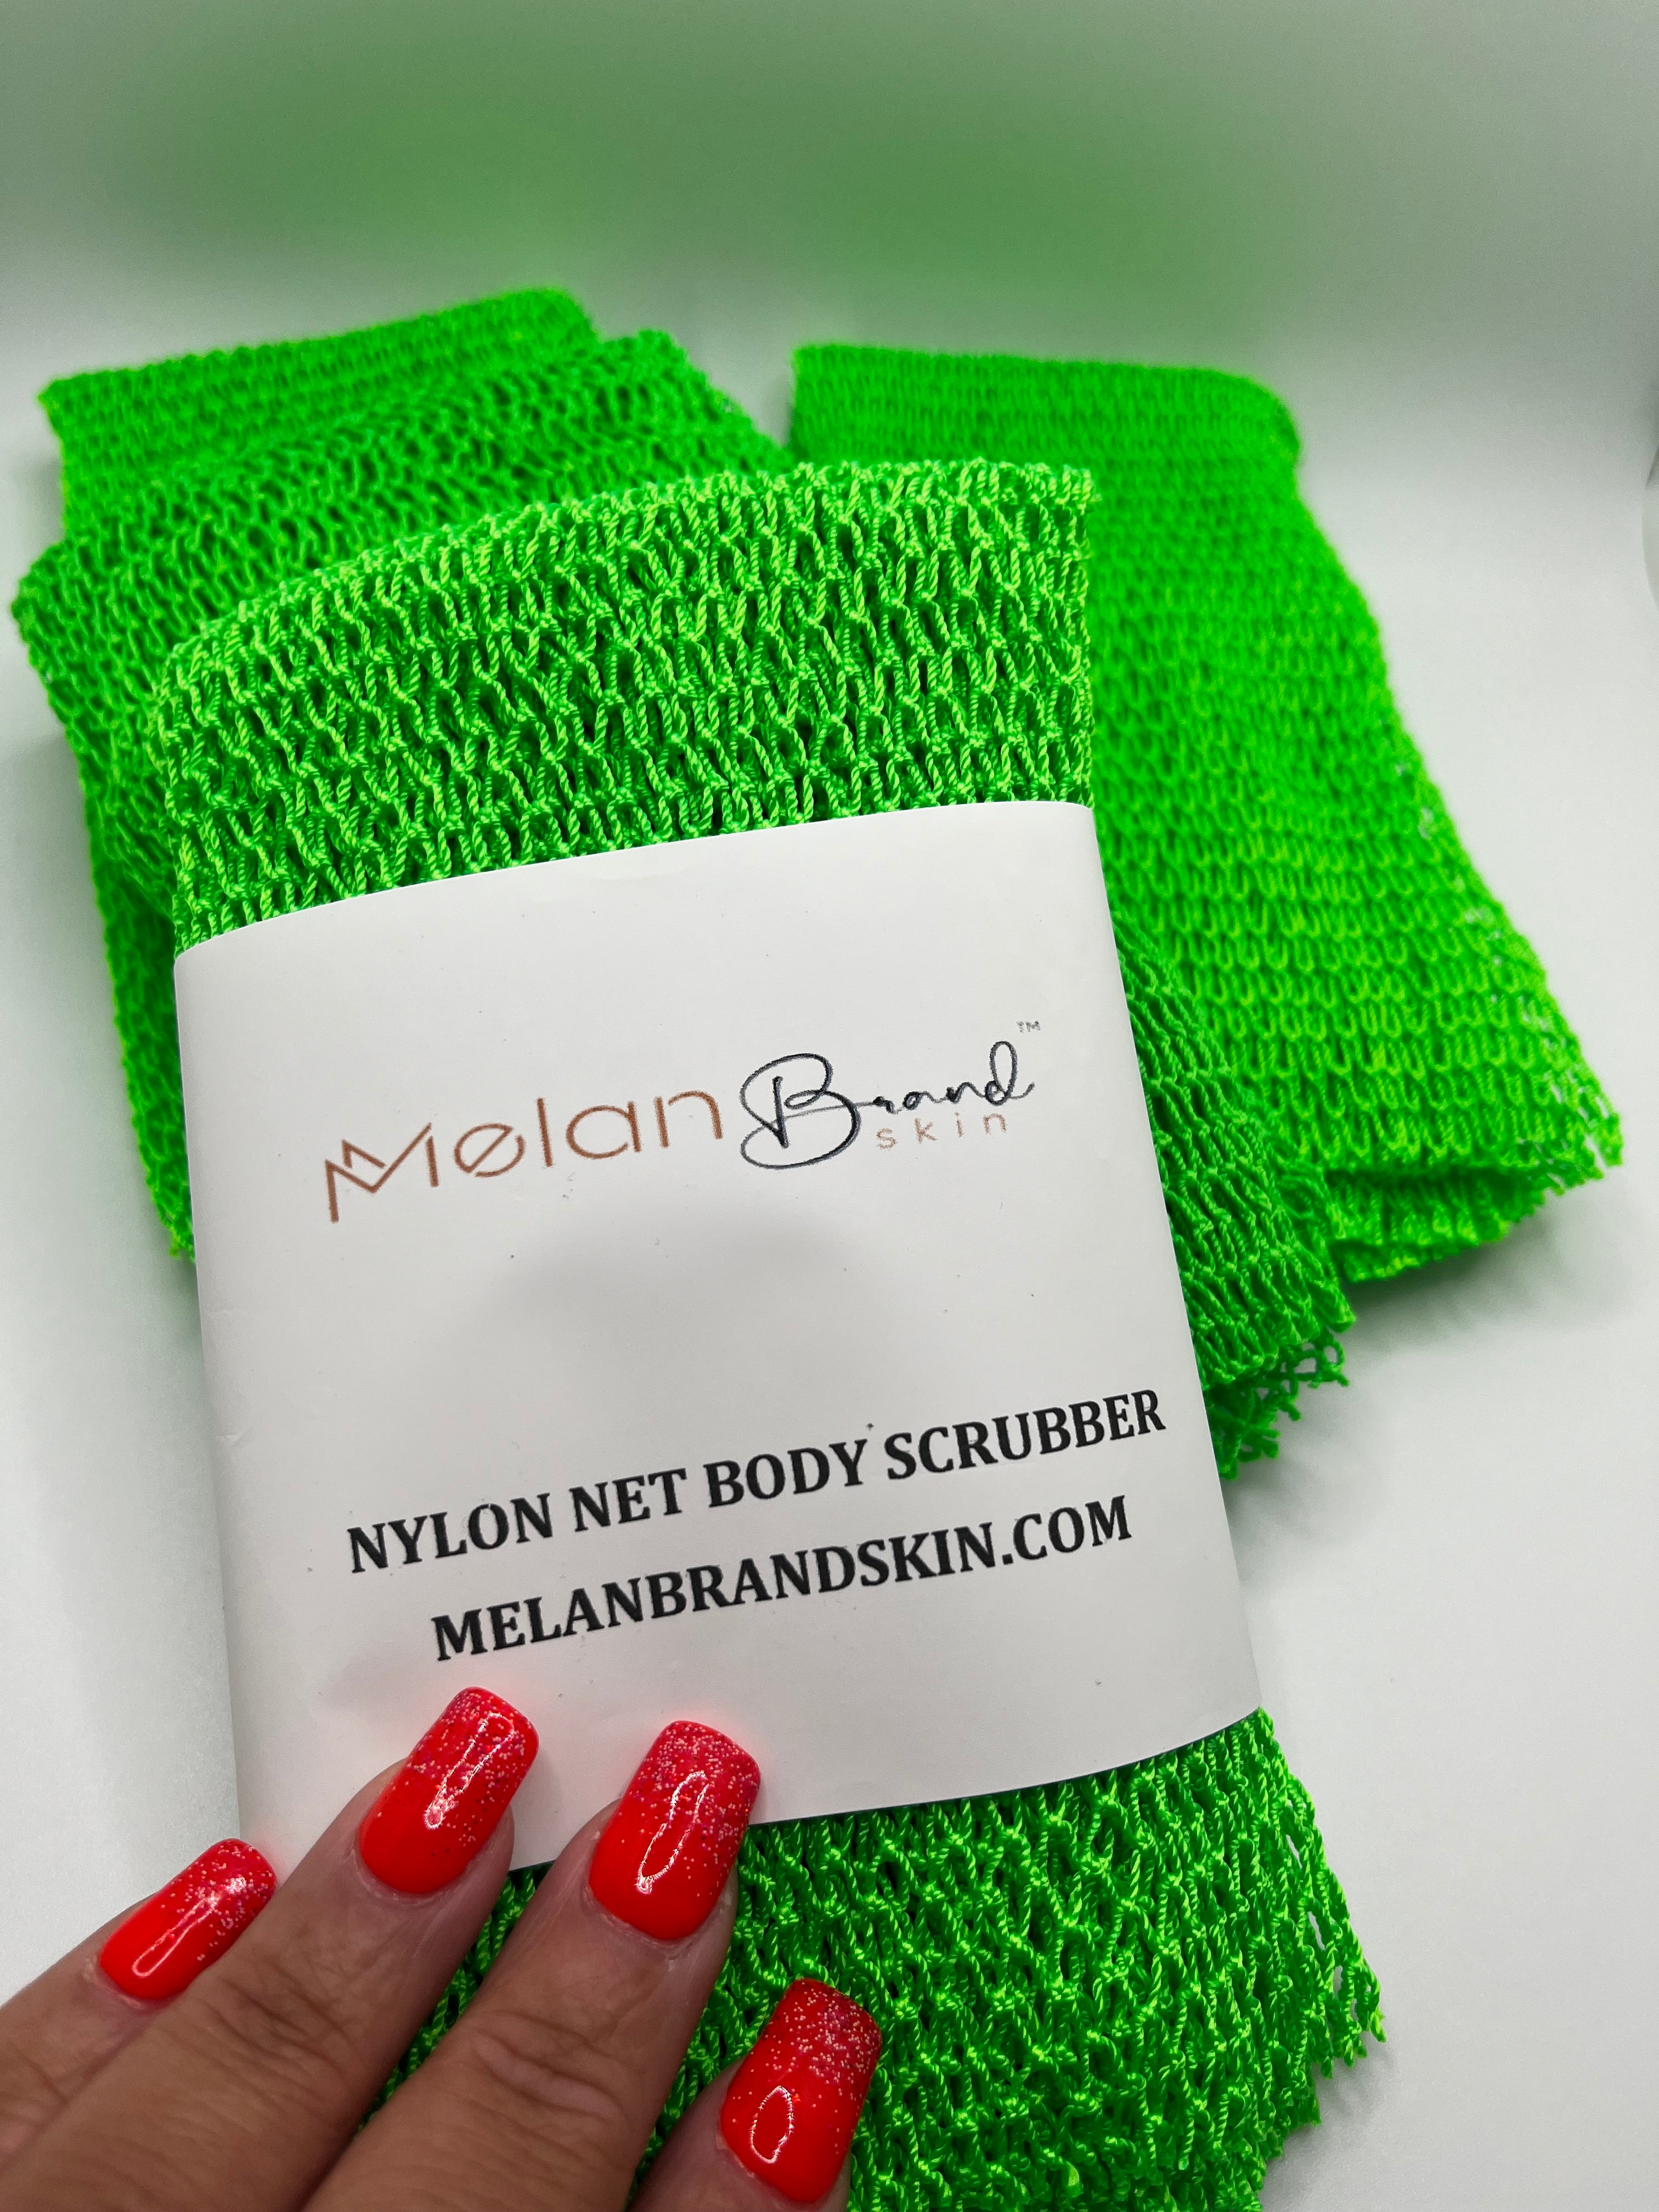 MelanBrand Skin, LLC